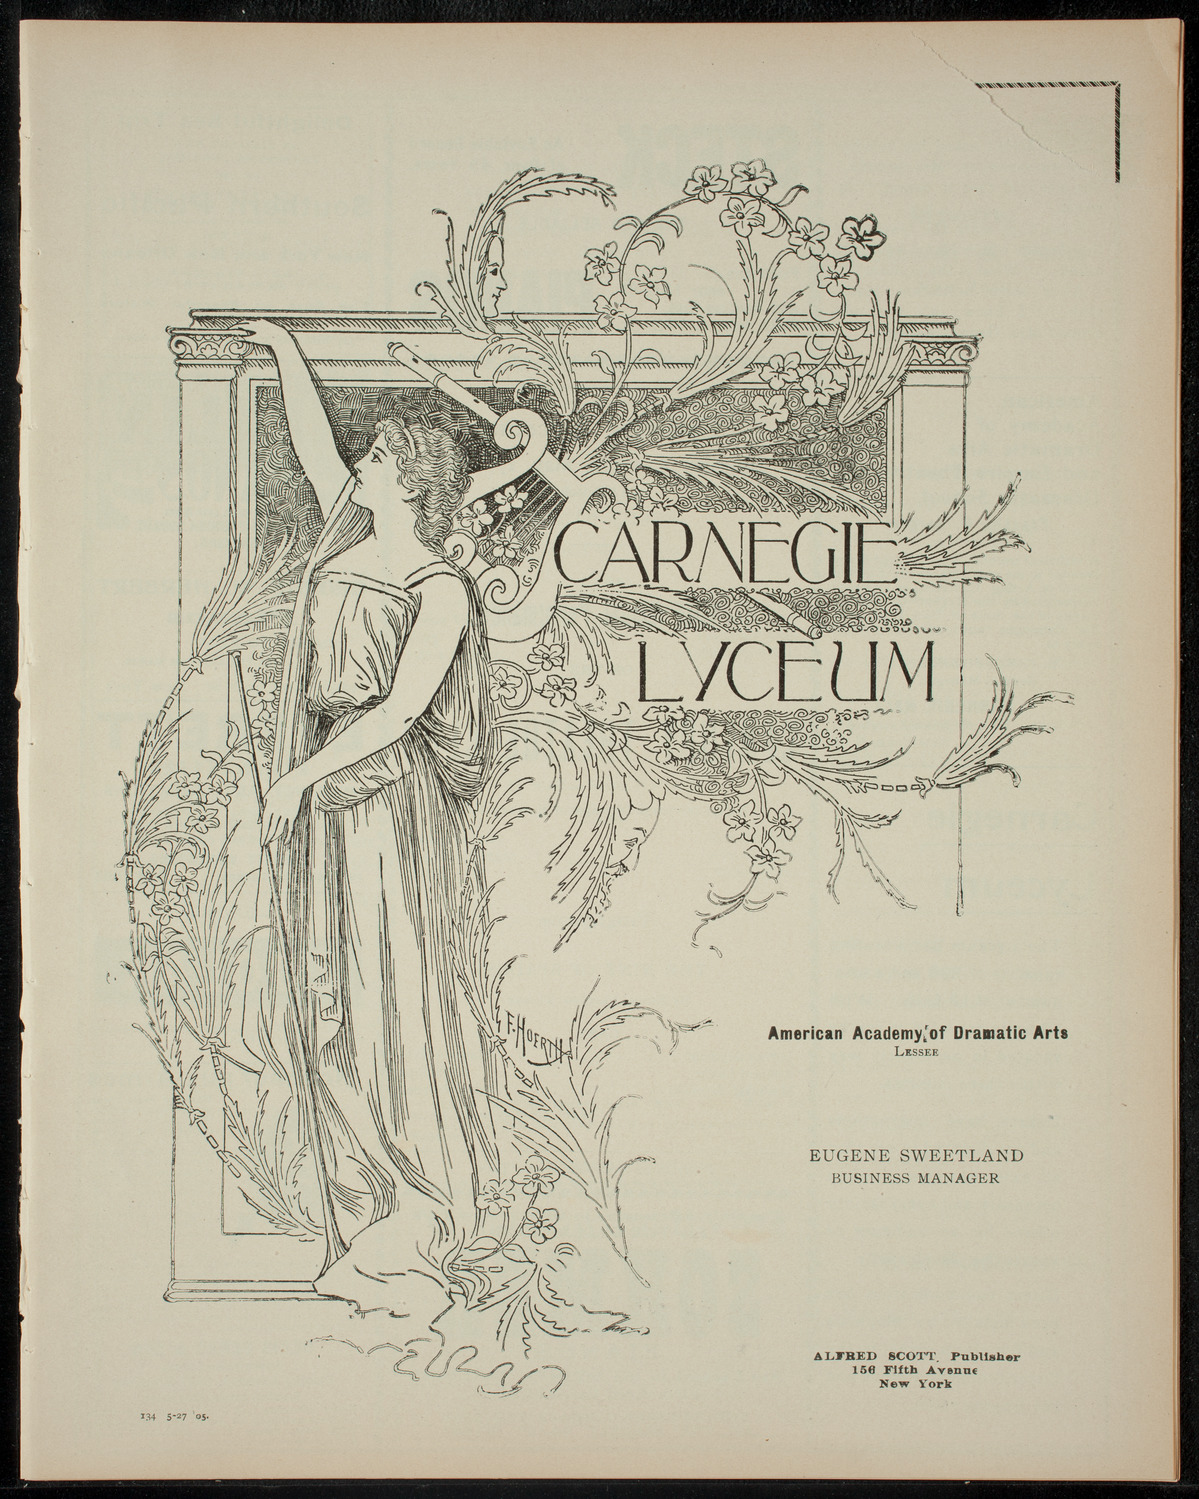 Century Theatre Club, May 27, 1905, program page 1